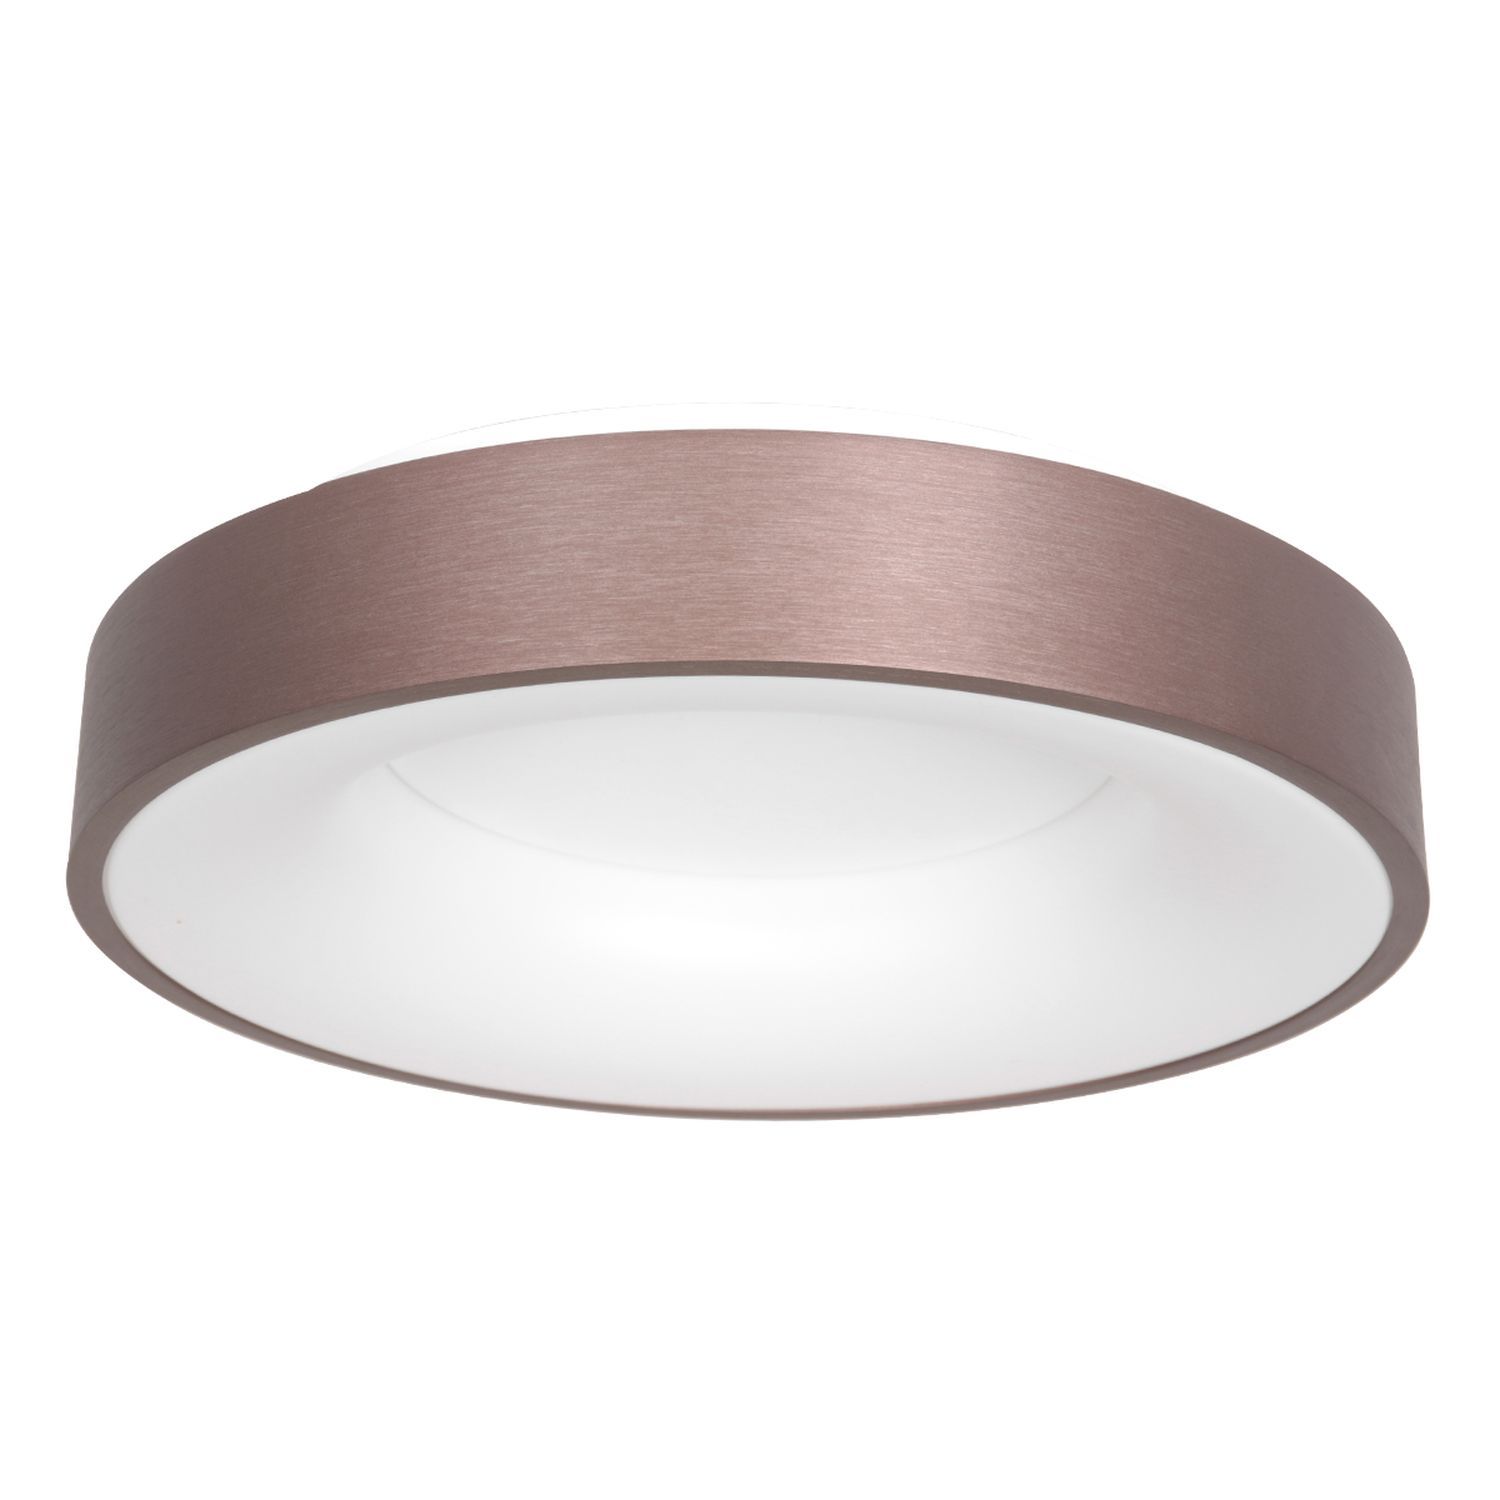 LED Deckenlampe Metall Kunststoff in Bronze Weiß Ø48 cm